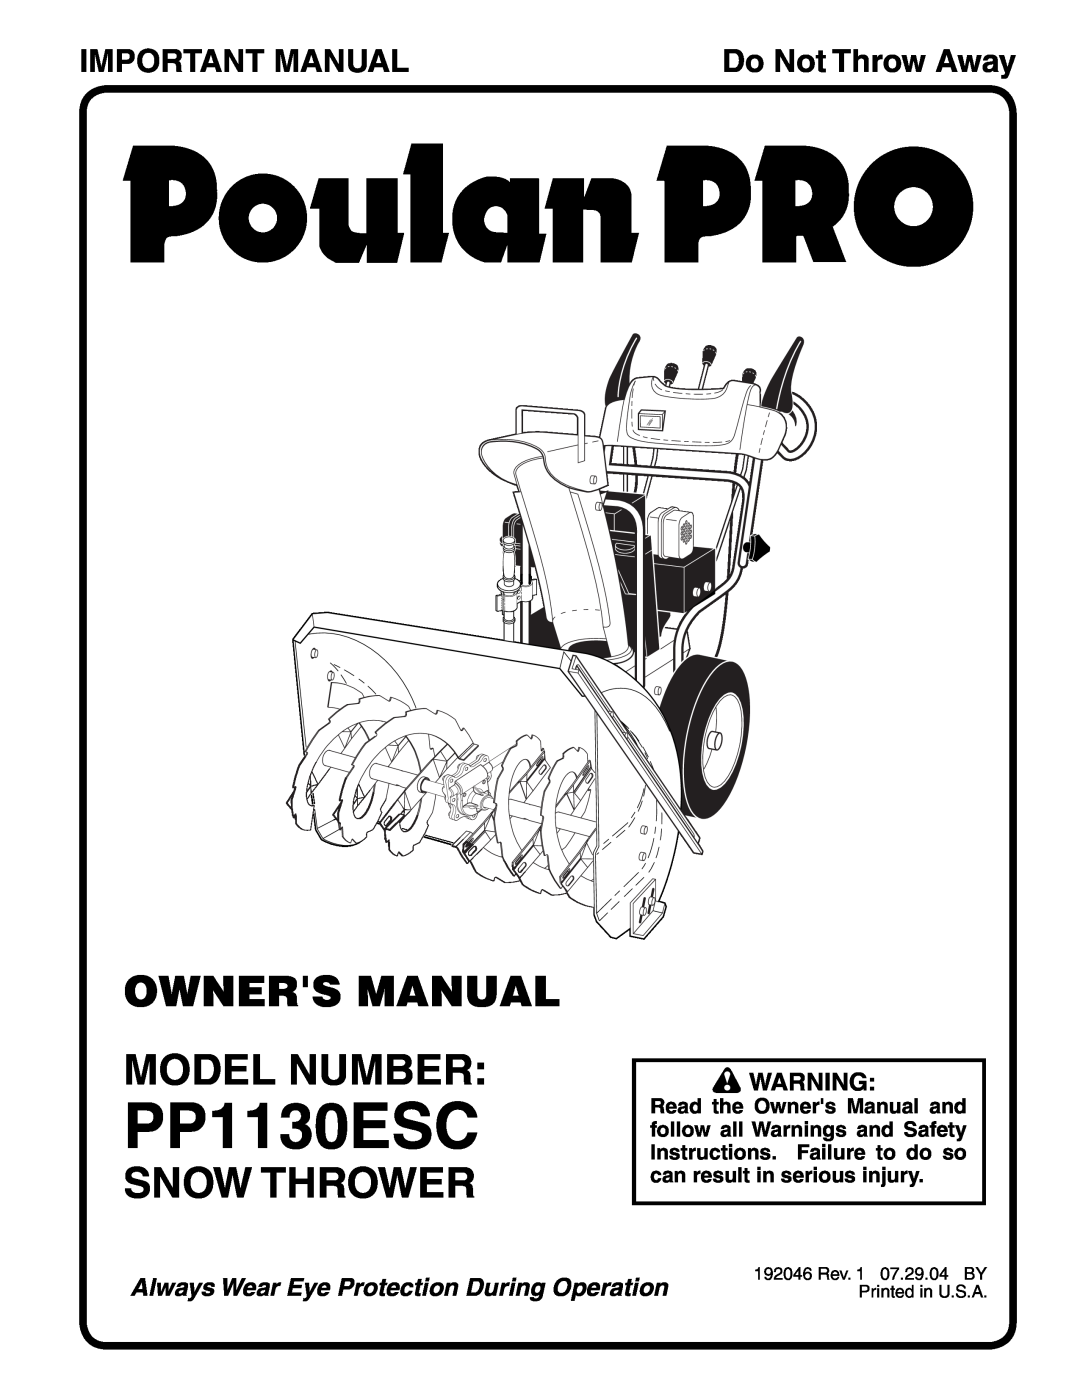 Poulan 192046 owner manual Snow Thrower, Important Manual, PP1130ESC, Do Not Throw Away 